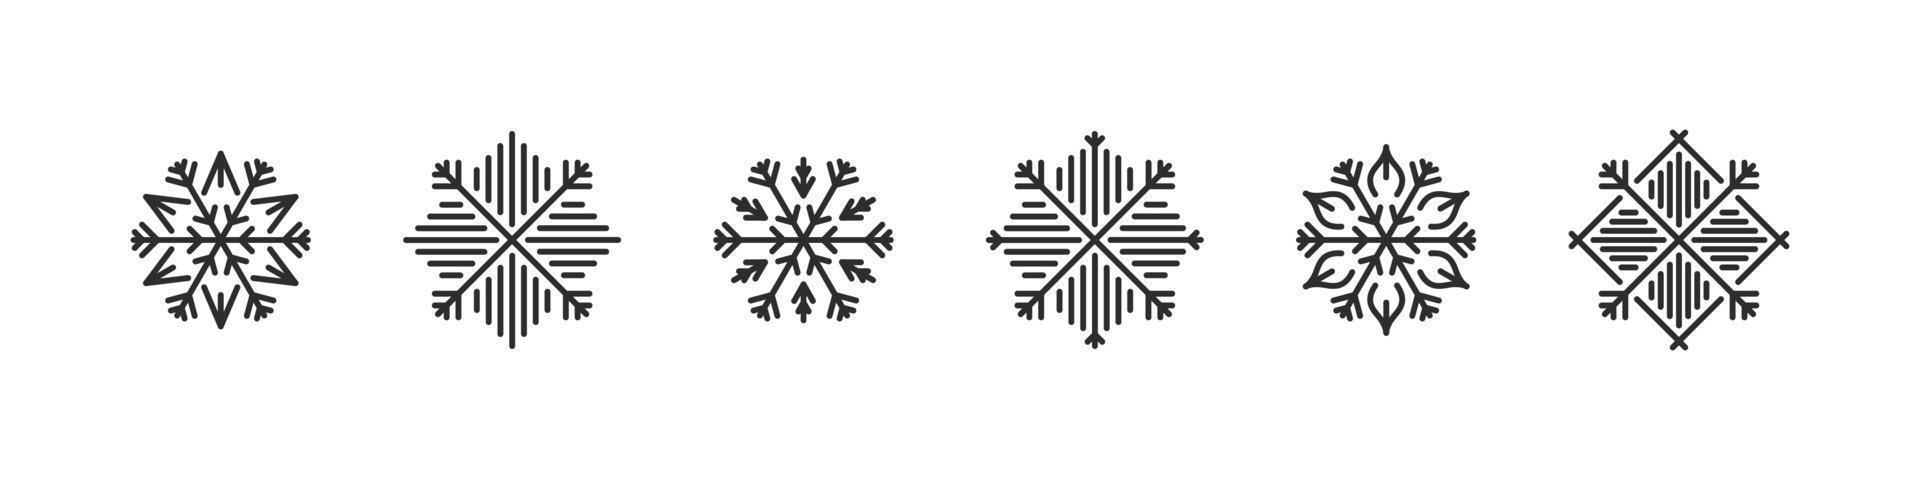 Snowflakes icons. Modern christmas icons. Xmas signs. Conceptual snowflakes ornament. Vector illustration